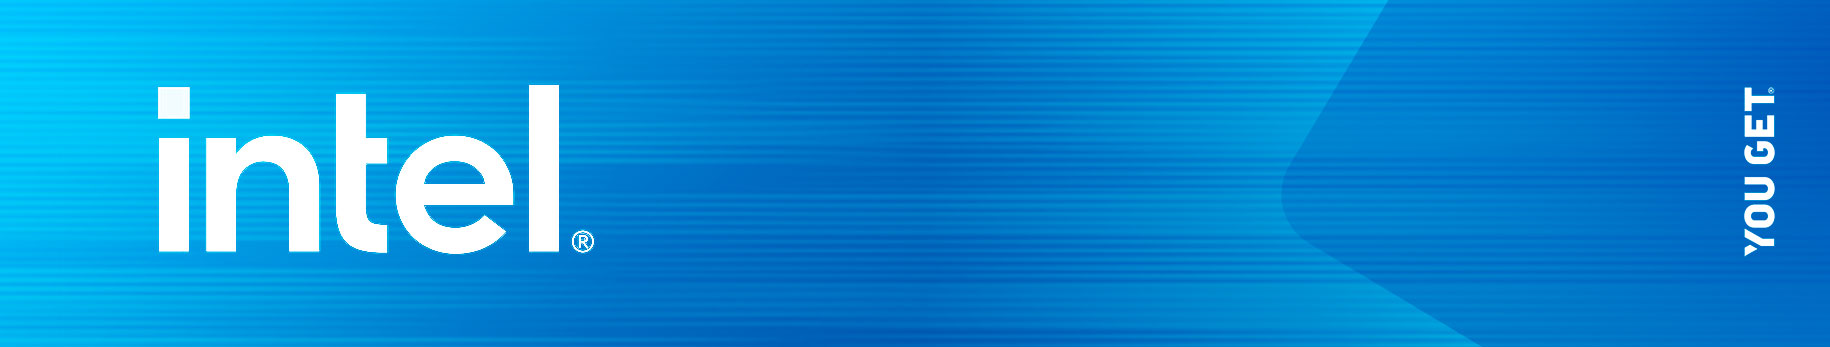 banner Intel